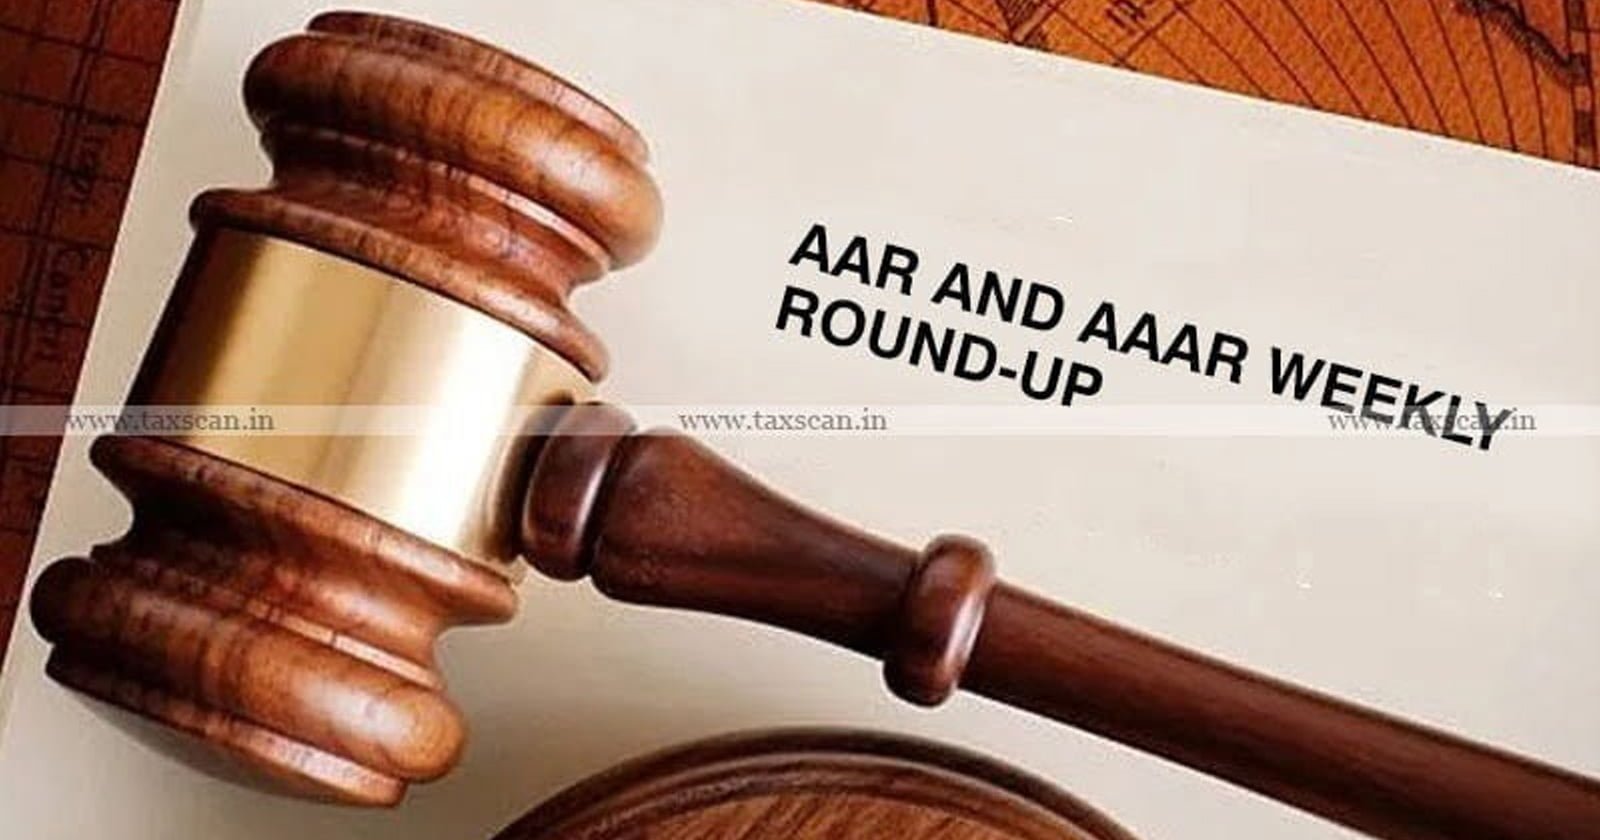 AAR - AAAR - Weekly Round Up - AAR & AAAR Weekly Round Up - AAAR Weekly Round Up - AAR Weekly Round Up - Authority for Advance Ruling - taxscan